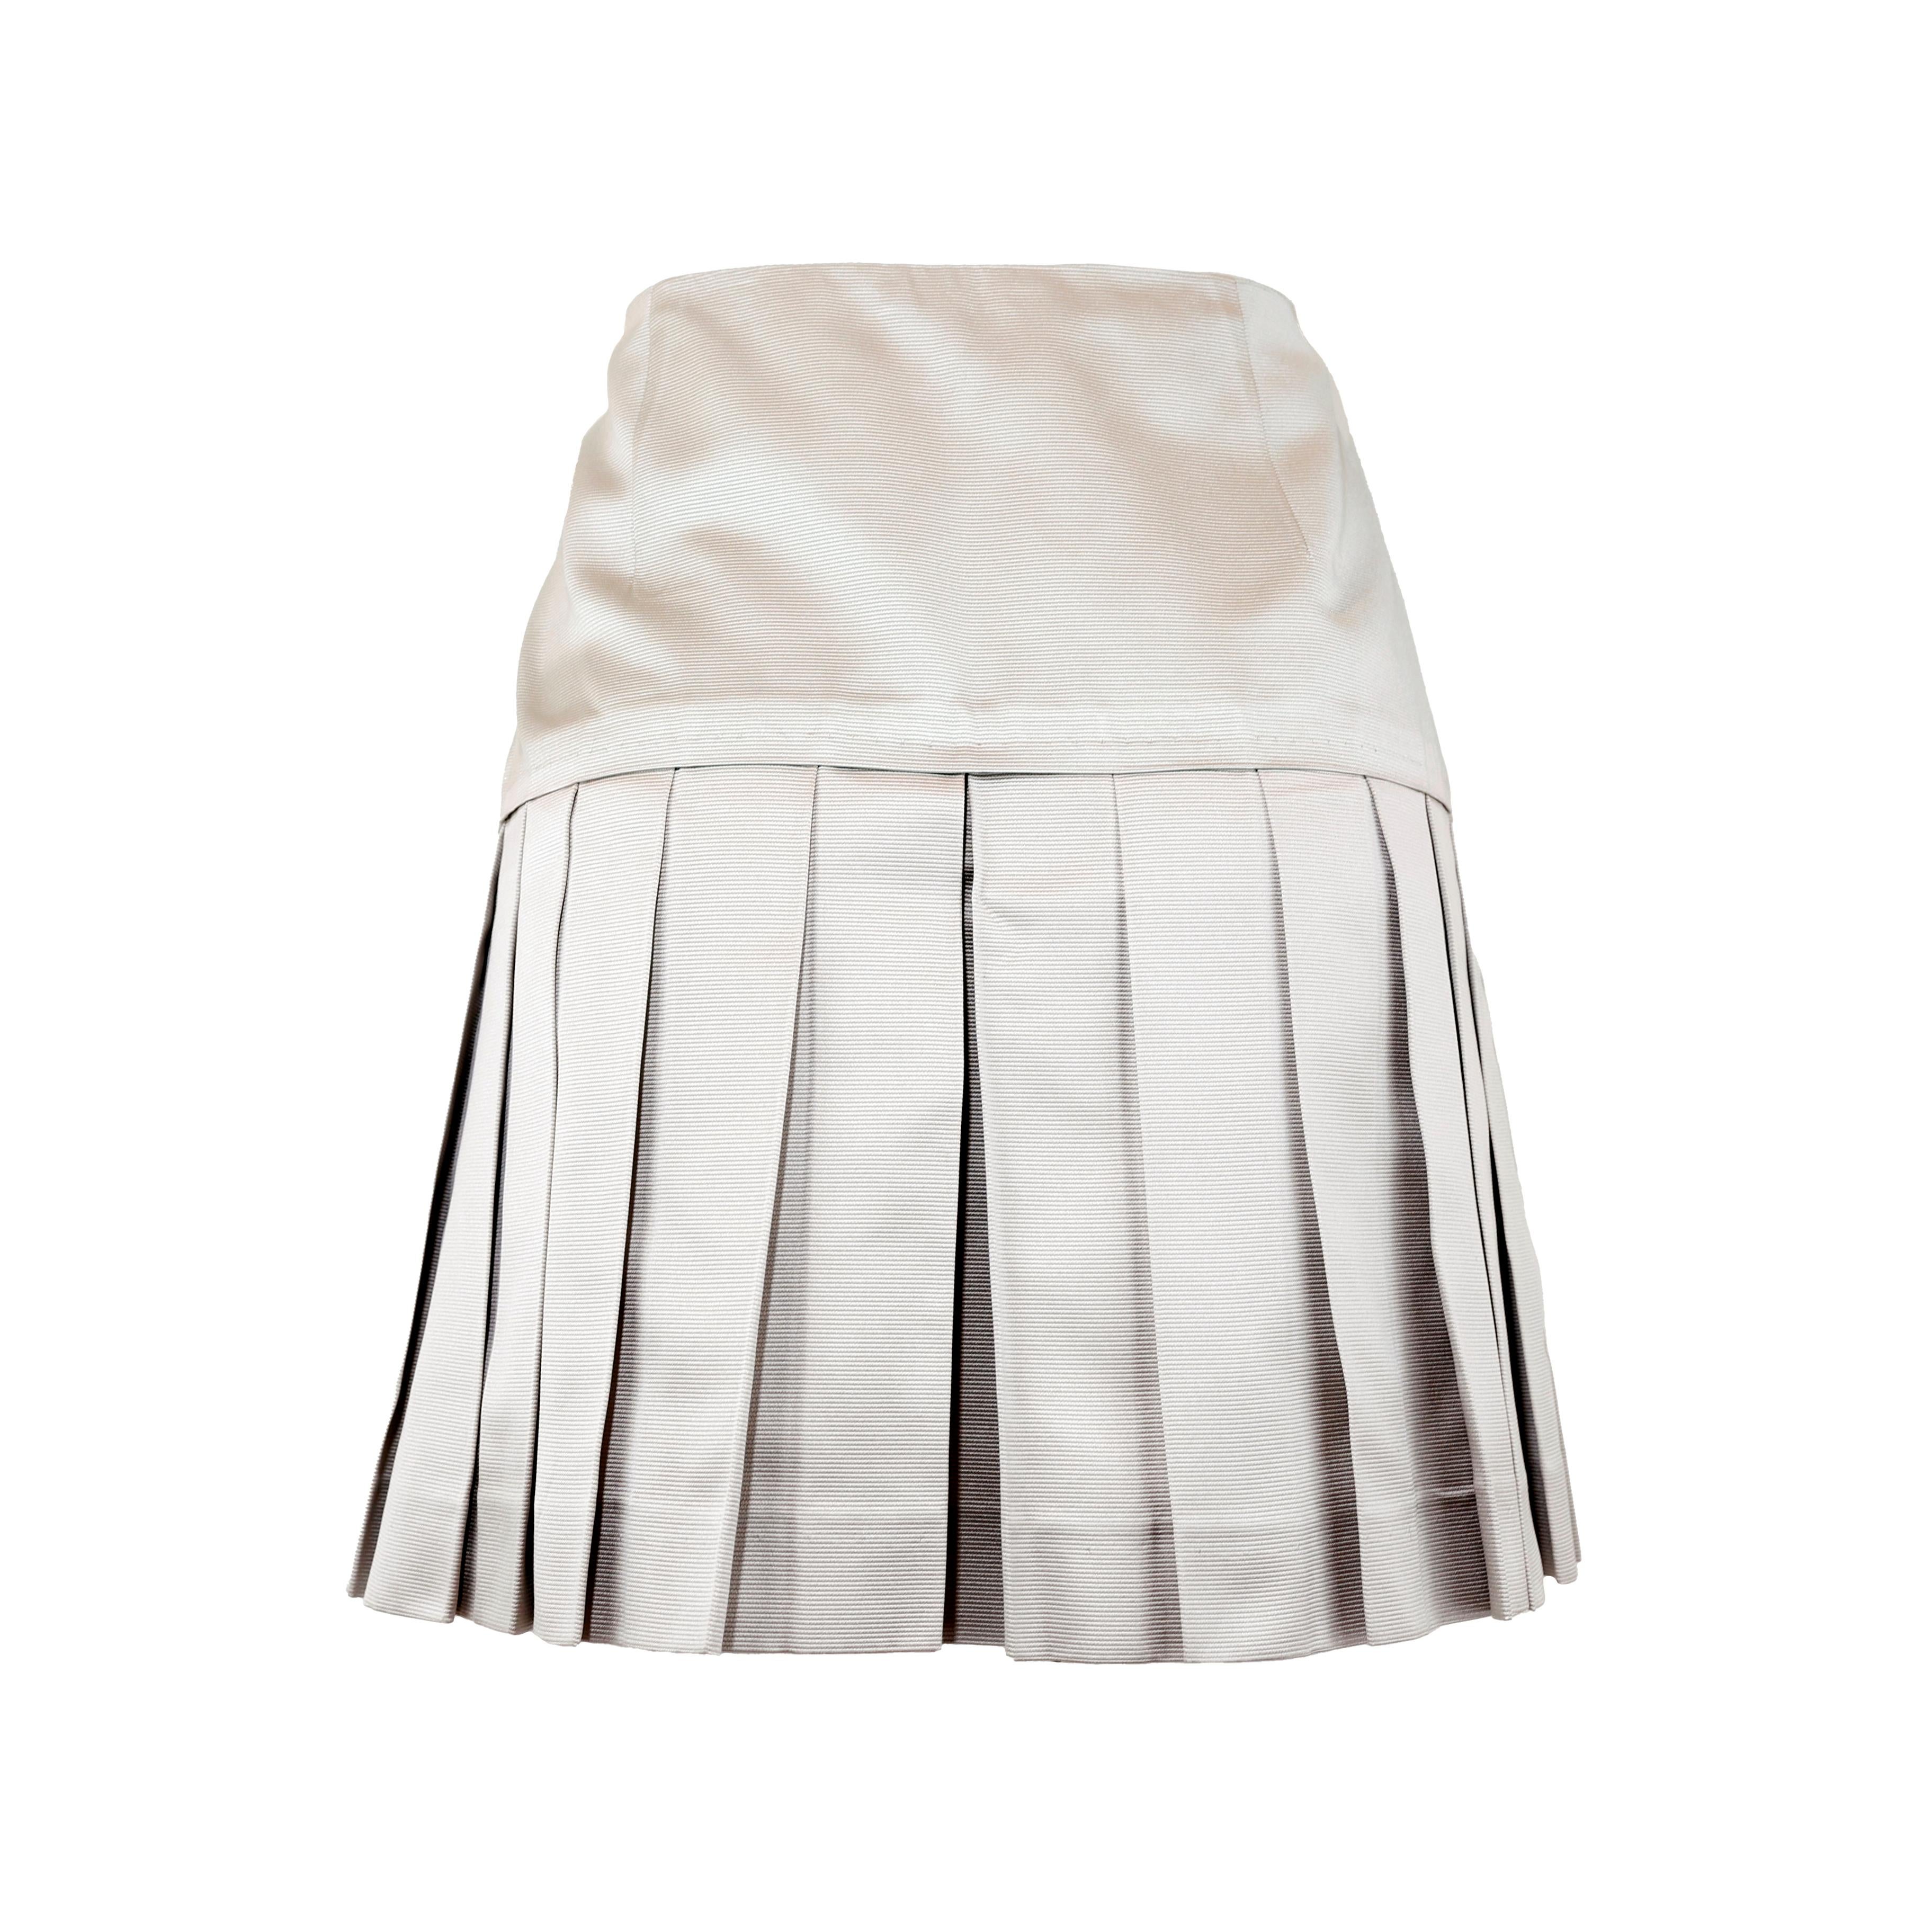 Miu Miu mini skirt in silk, color grey. Size 40 IT.

Condition:
Excellent.